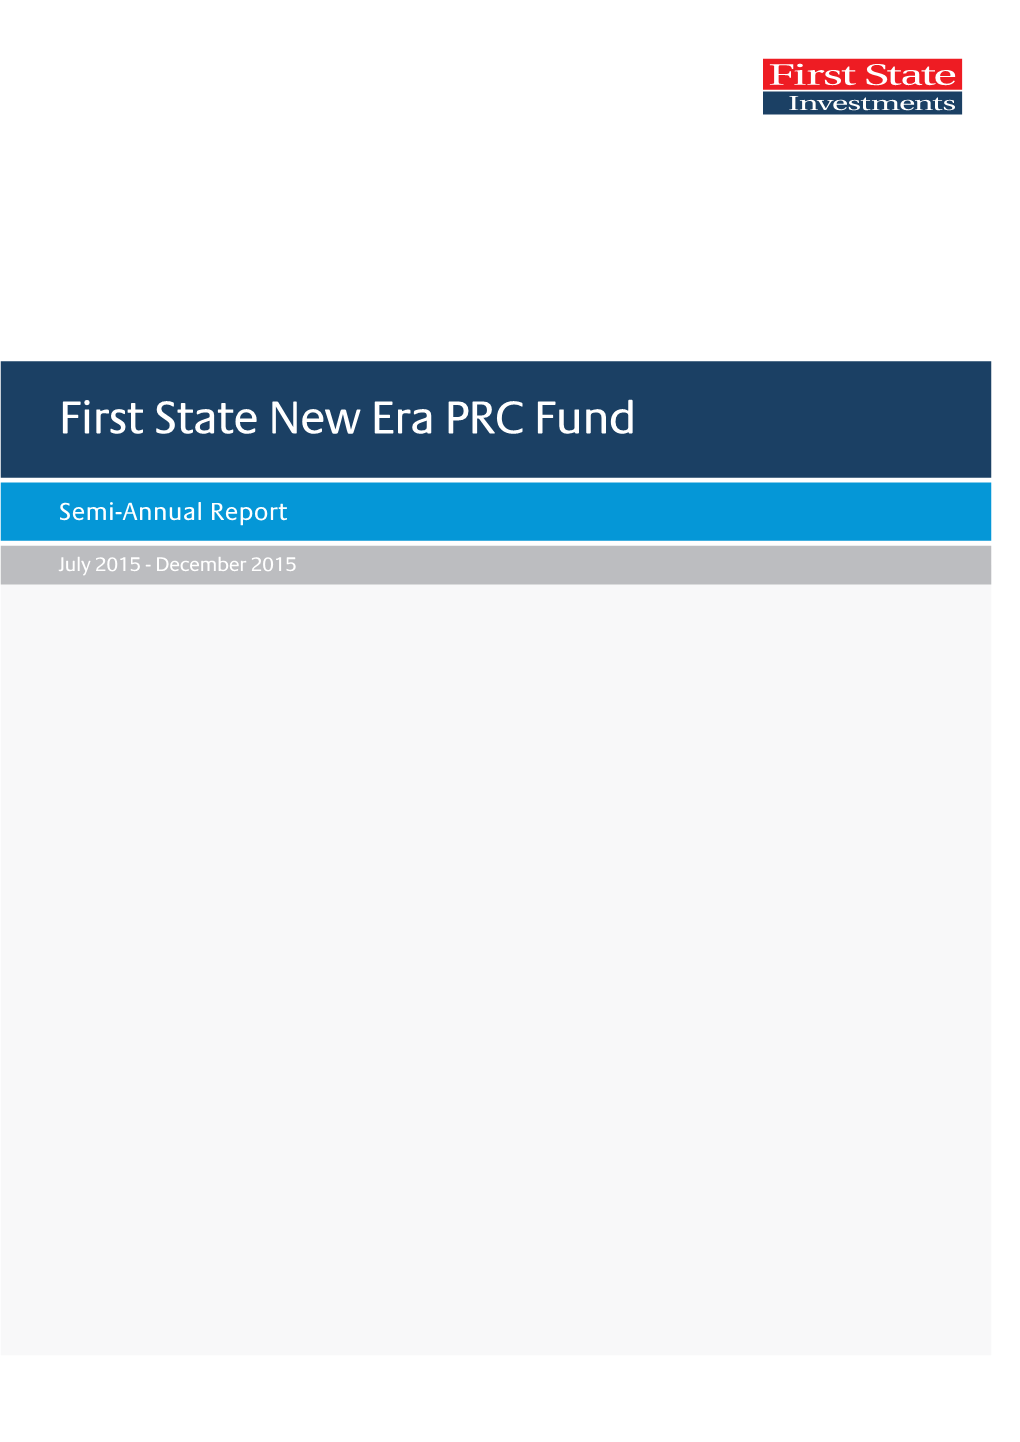 New Era PRC Fund